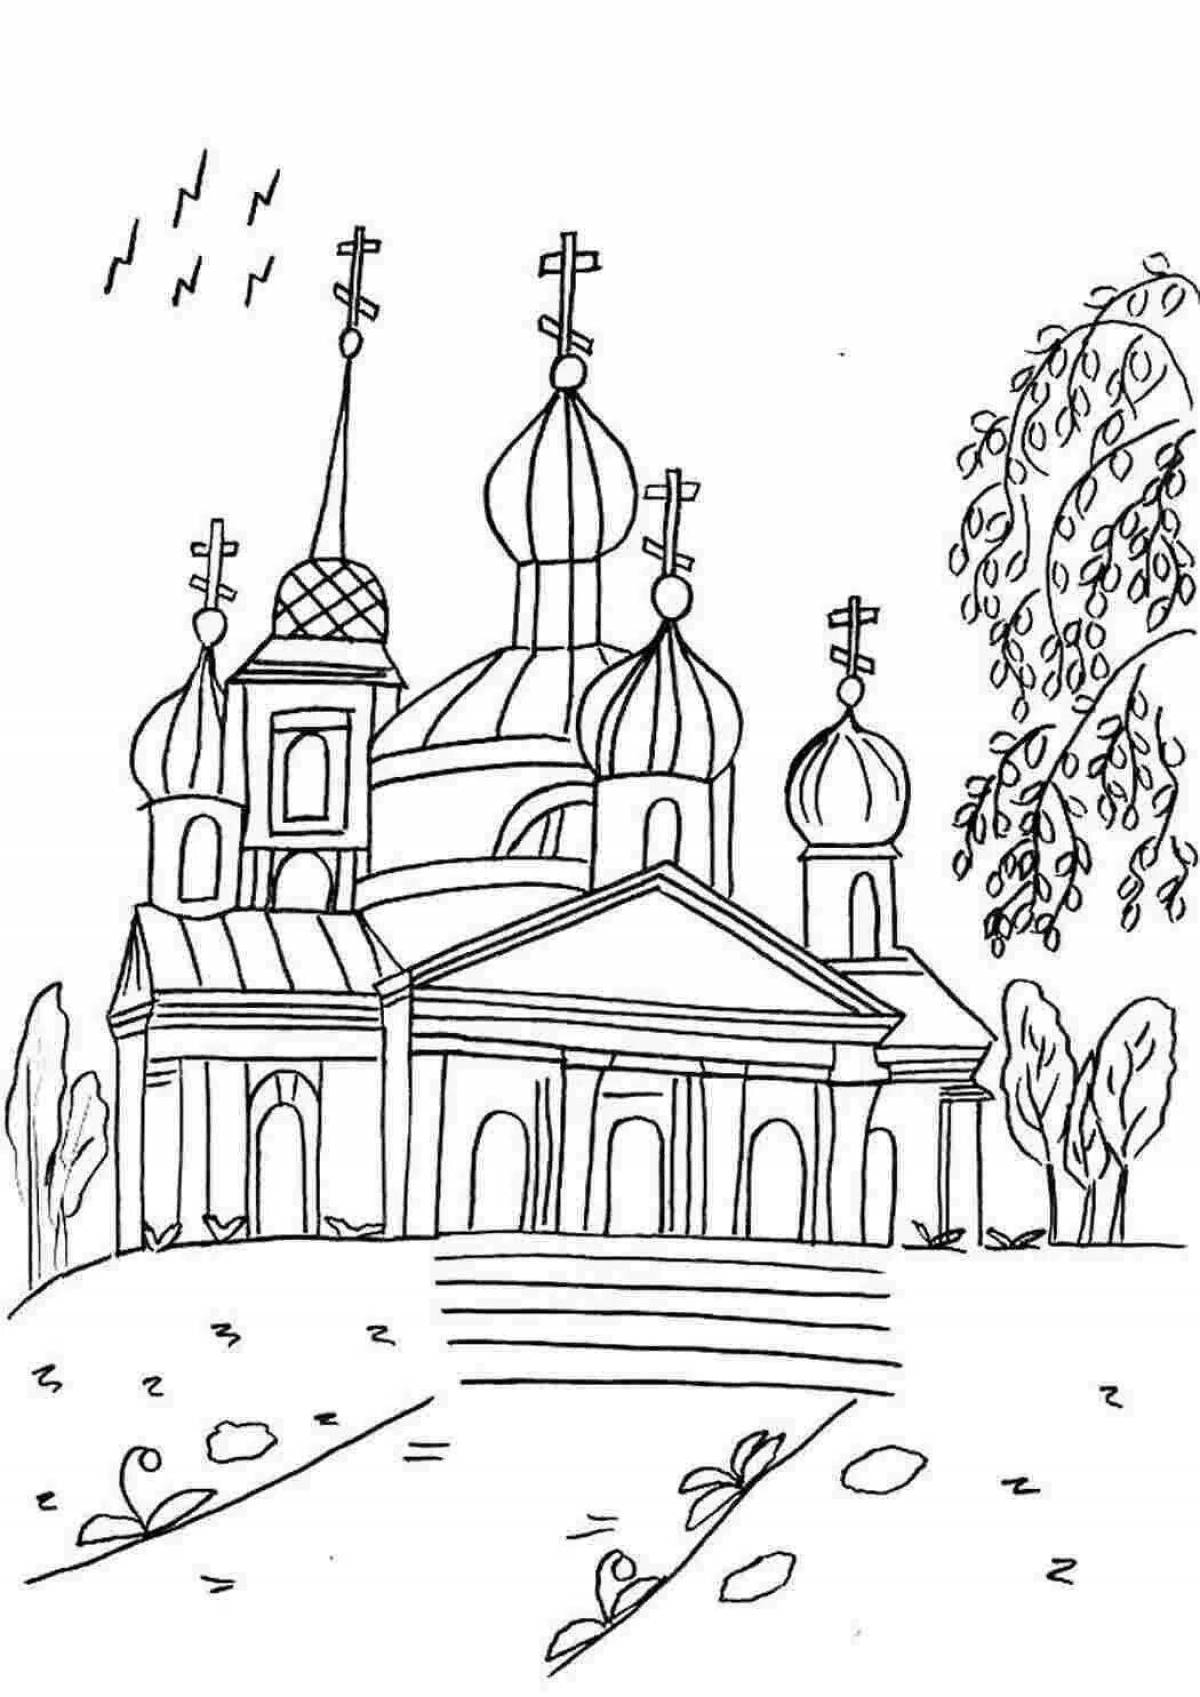 Joyful orthodox church coloring book for kids